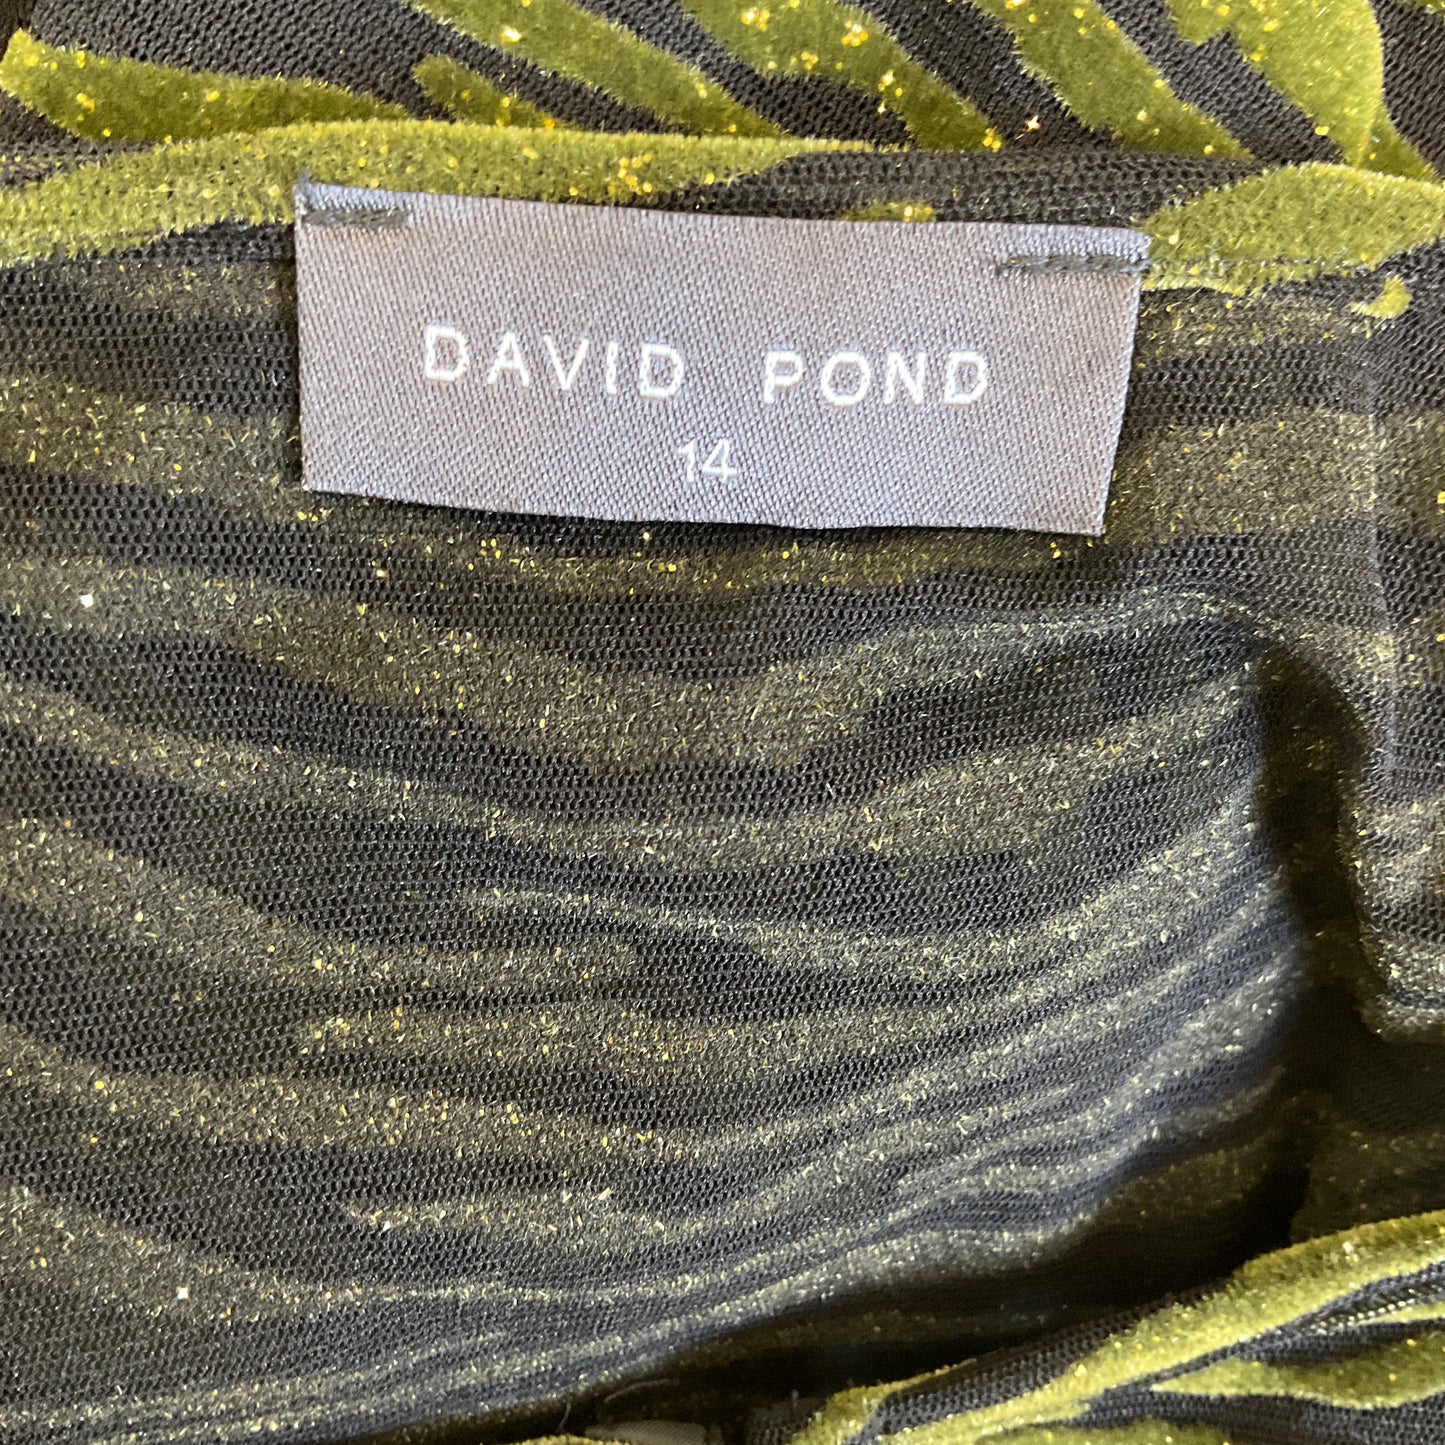 David Pond - Jacket & Cami